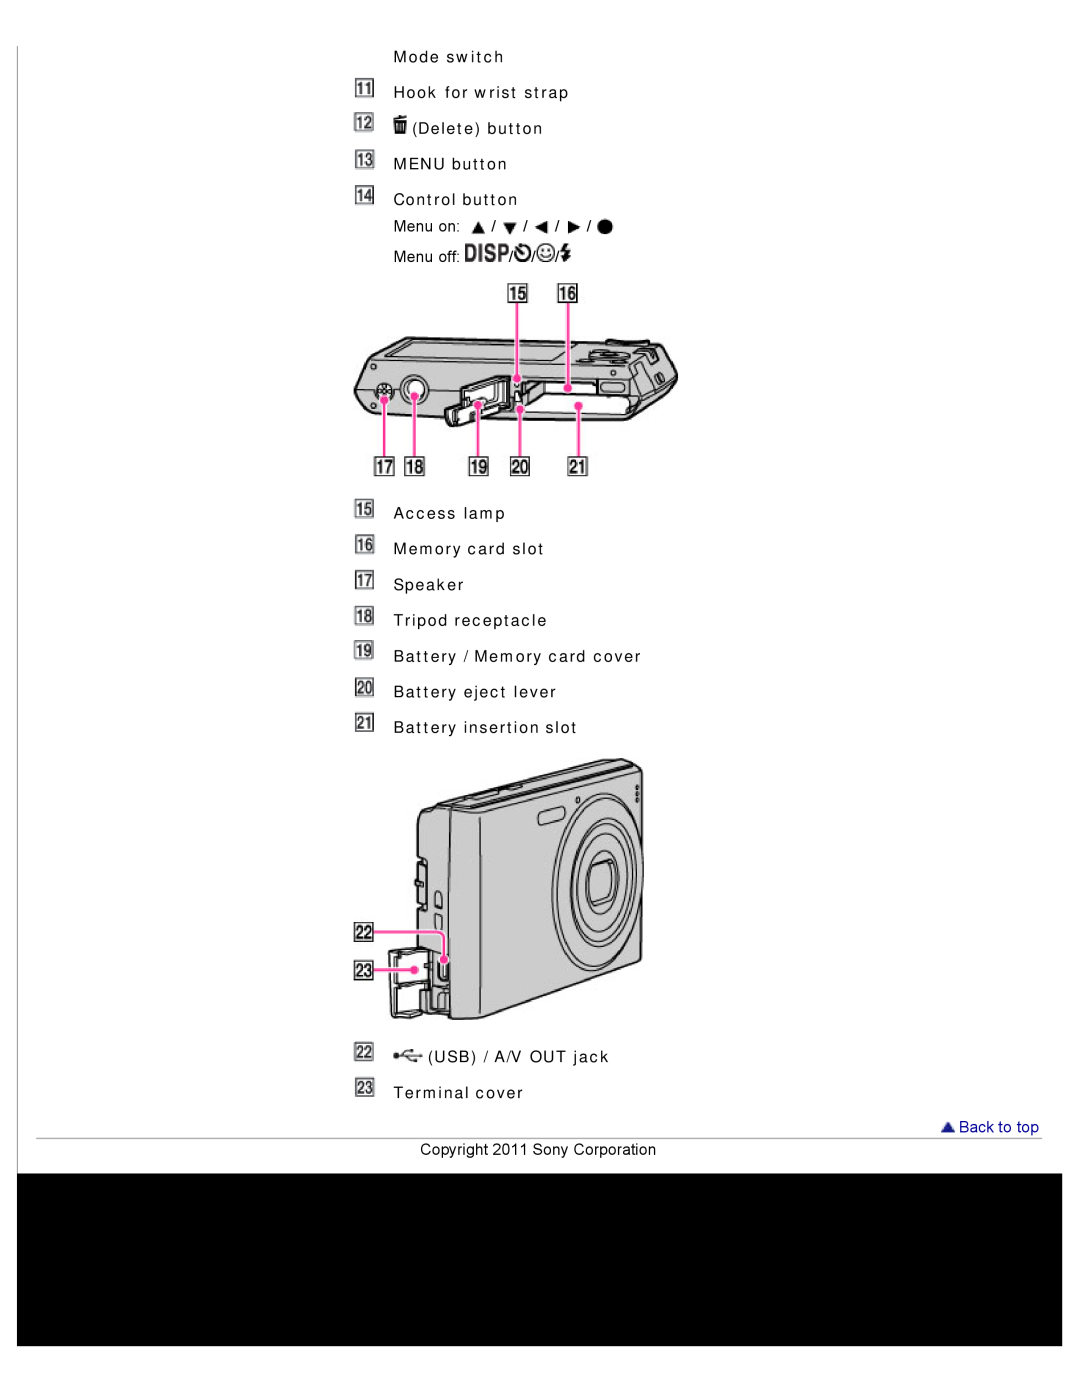 Sony DSC-W510 manual Mode switch Hook for wrist strap Delete button MENU button, Control button, Back to top 